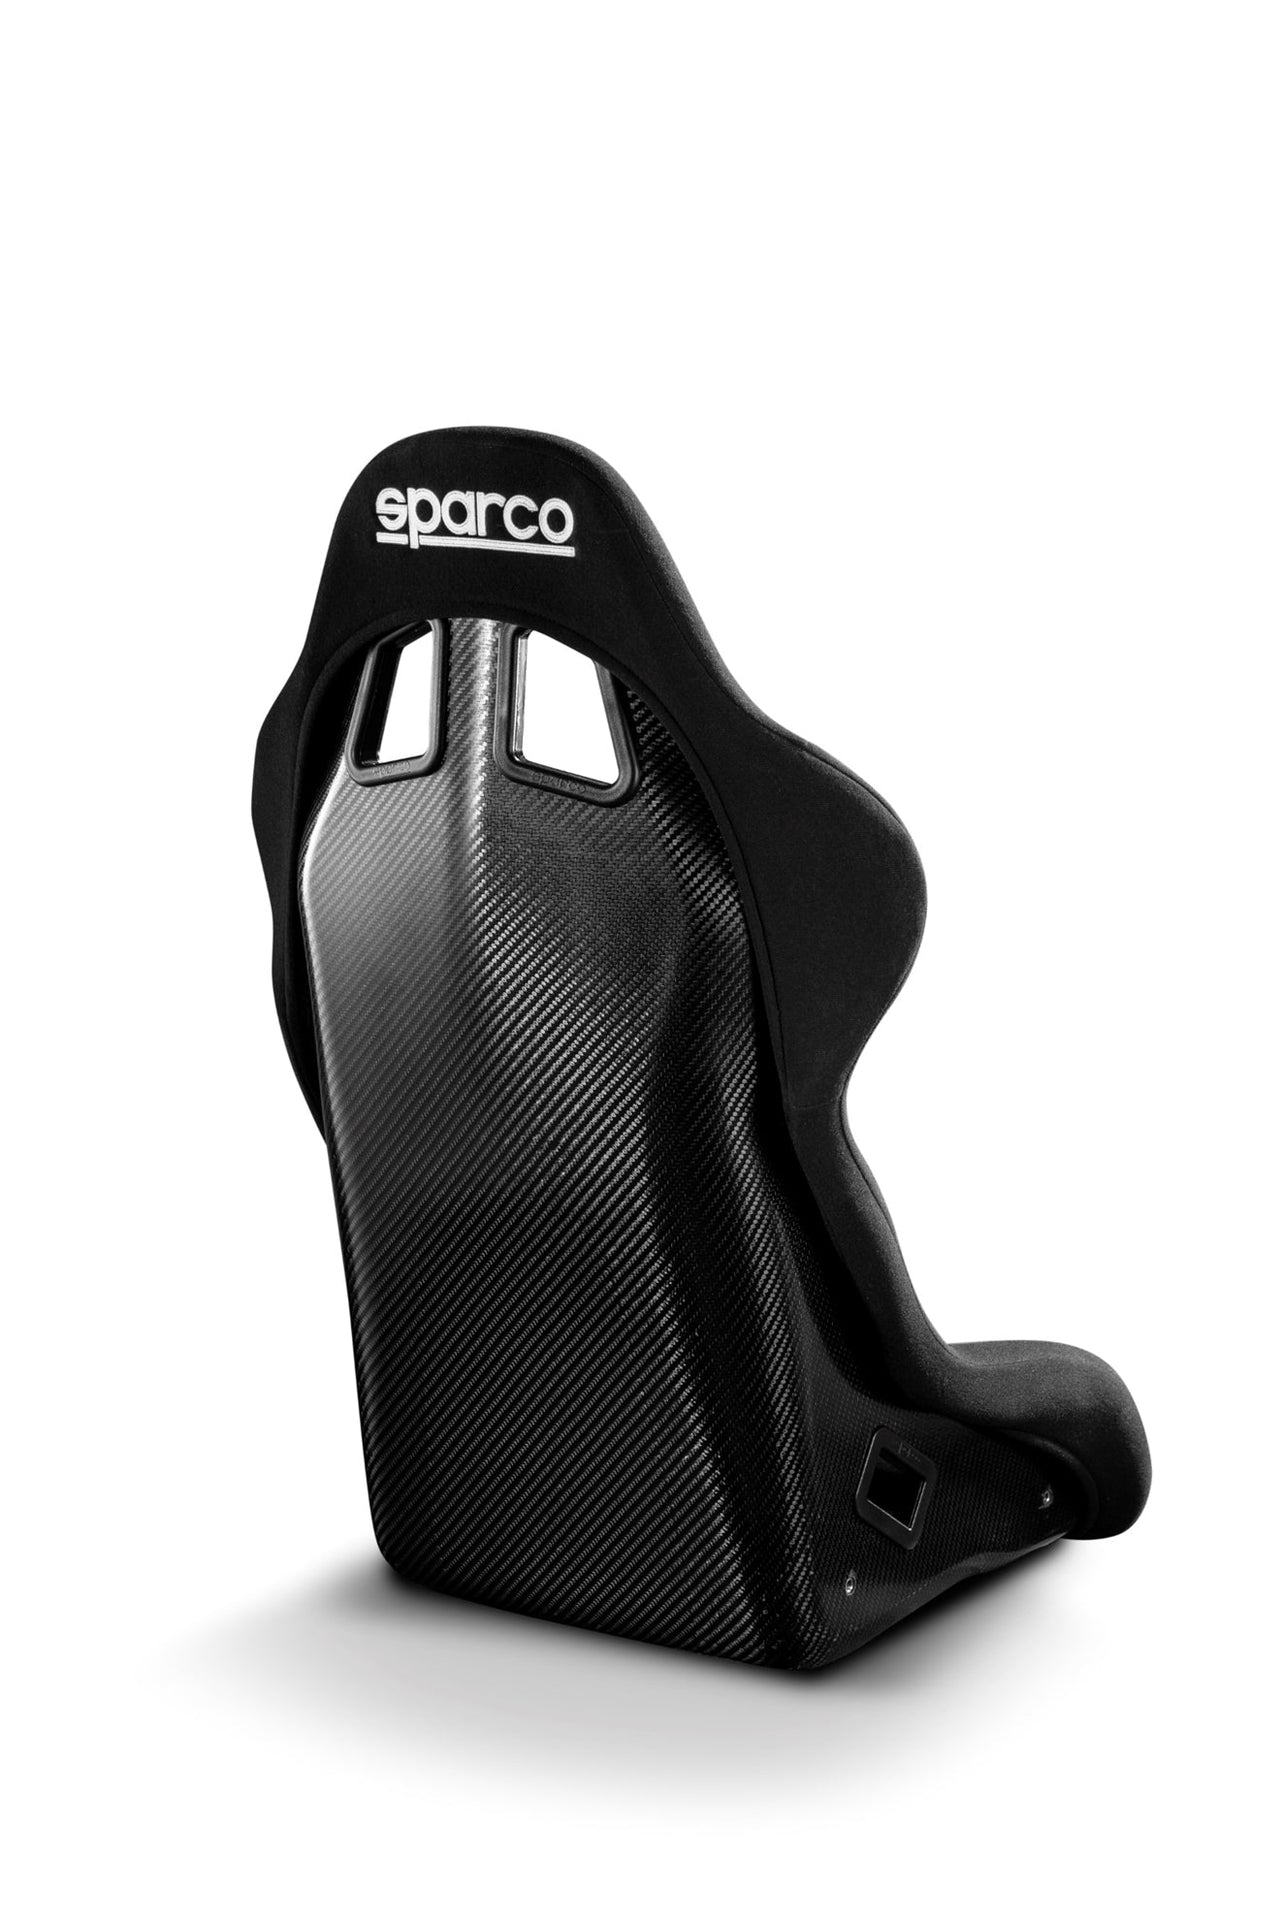 Sparco  Evo Carbon Fiber 008007ZNR Race Seat beack